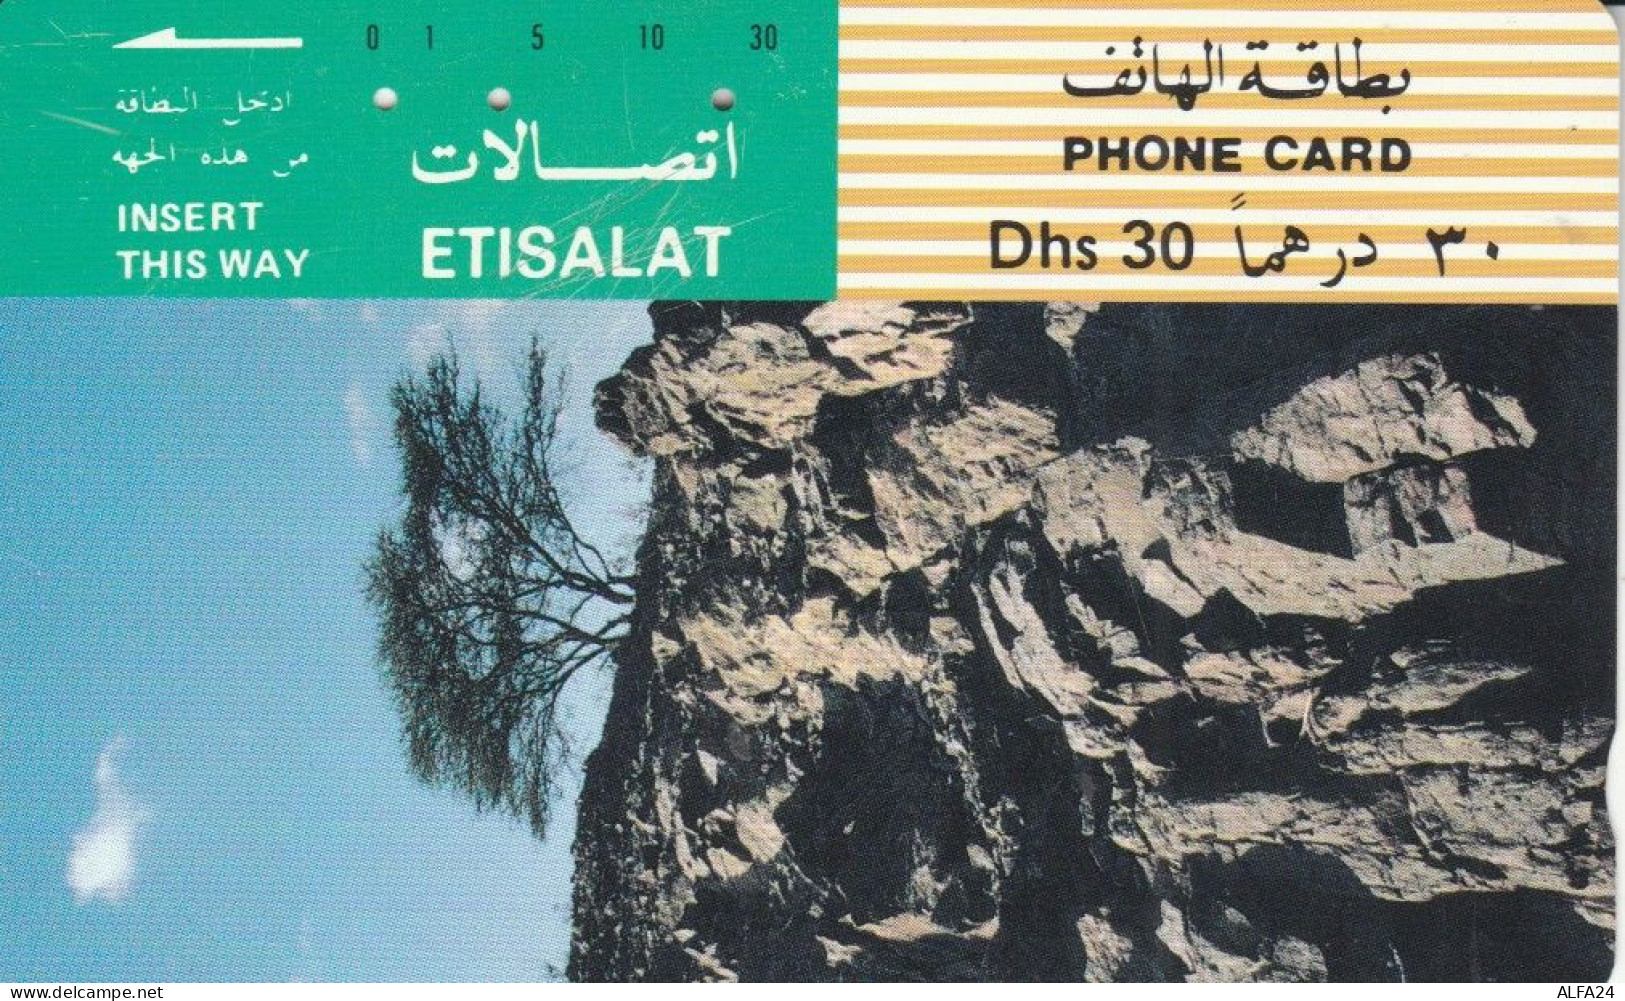 PHONE CARD EMIRATI ARABI (CK1421 - Emirats Arabes Unis